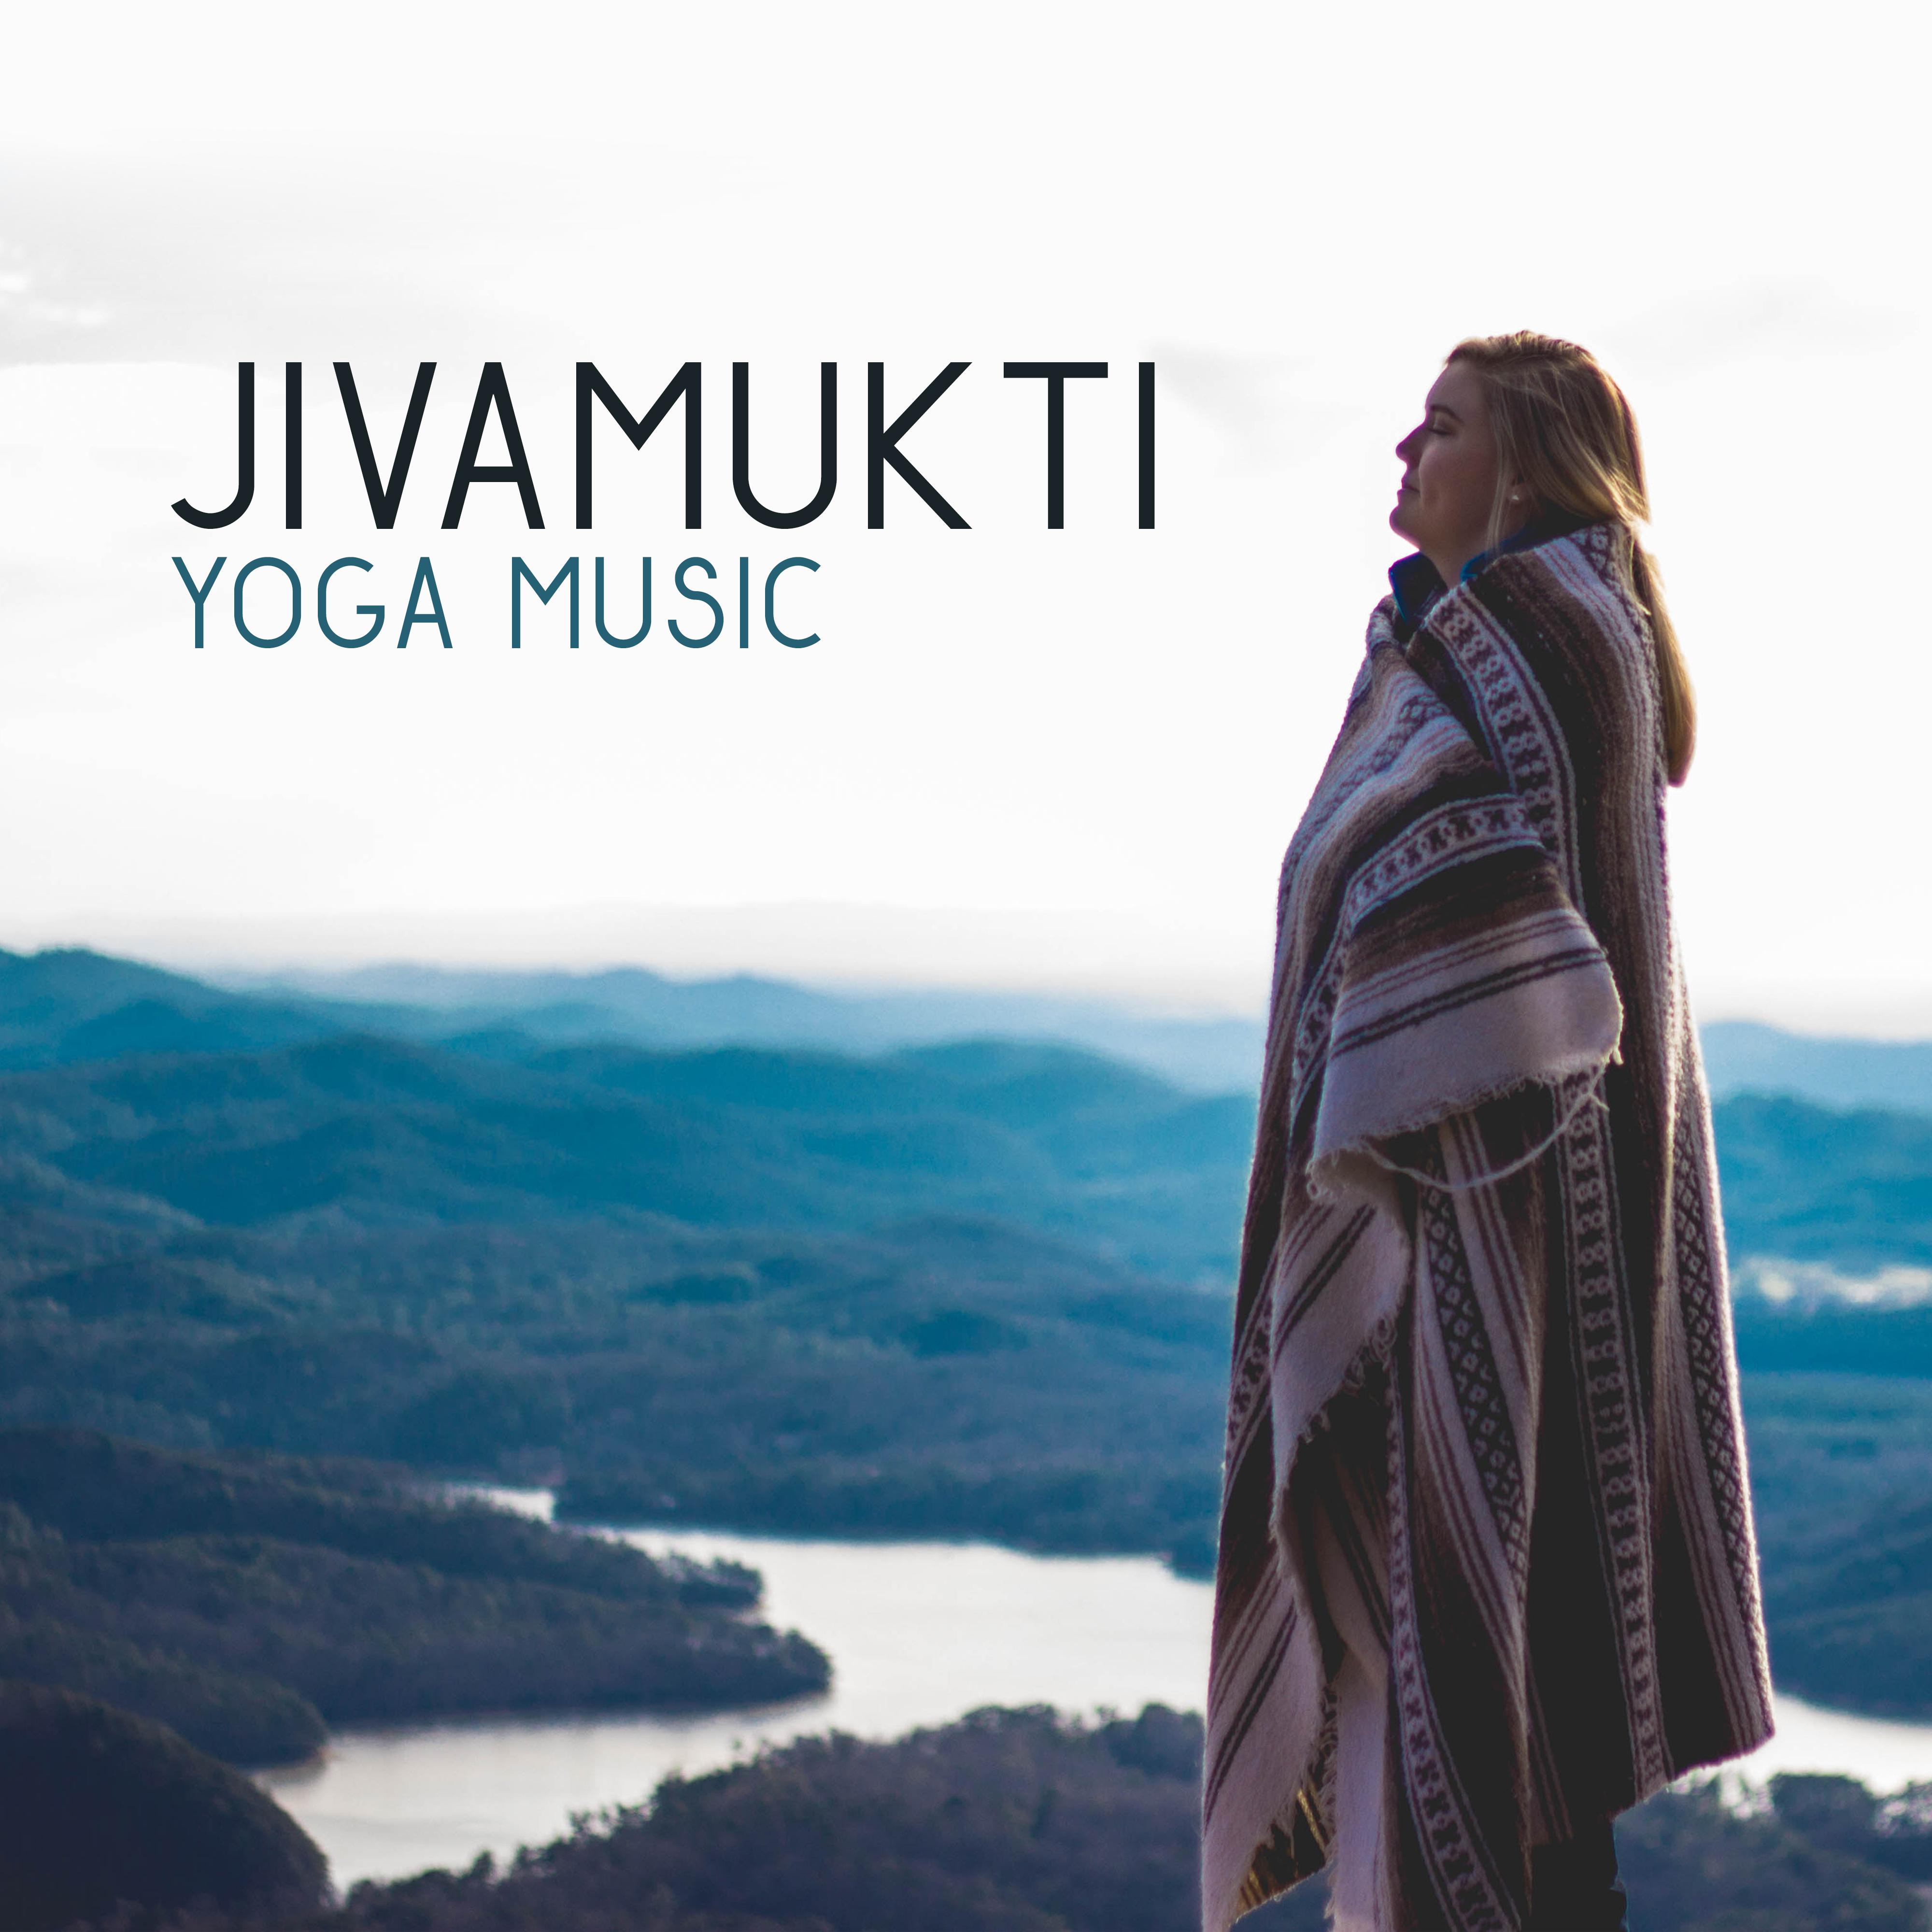 Jivamukti Yoga Music